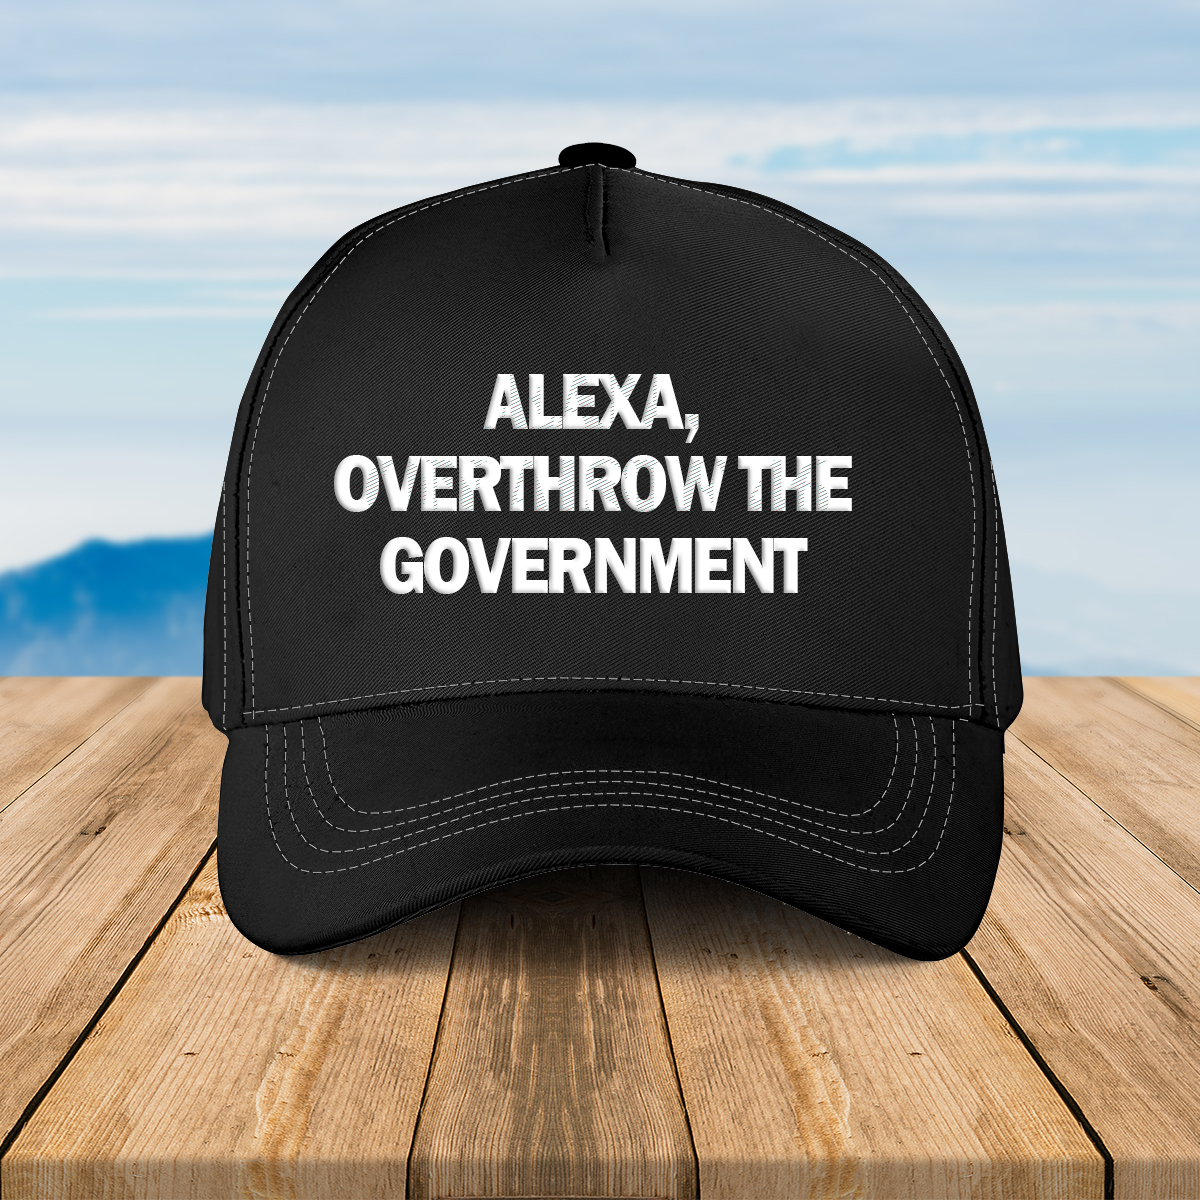 Alexa overthrow the government full print classic hat